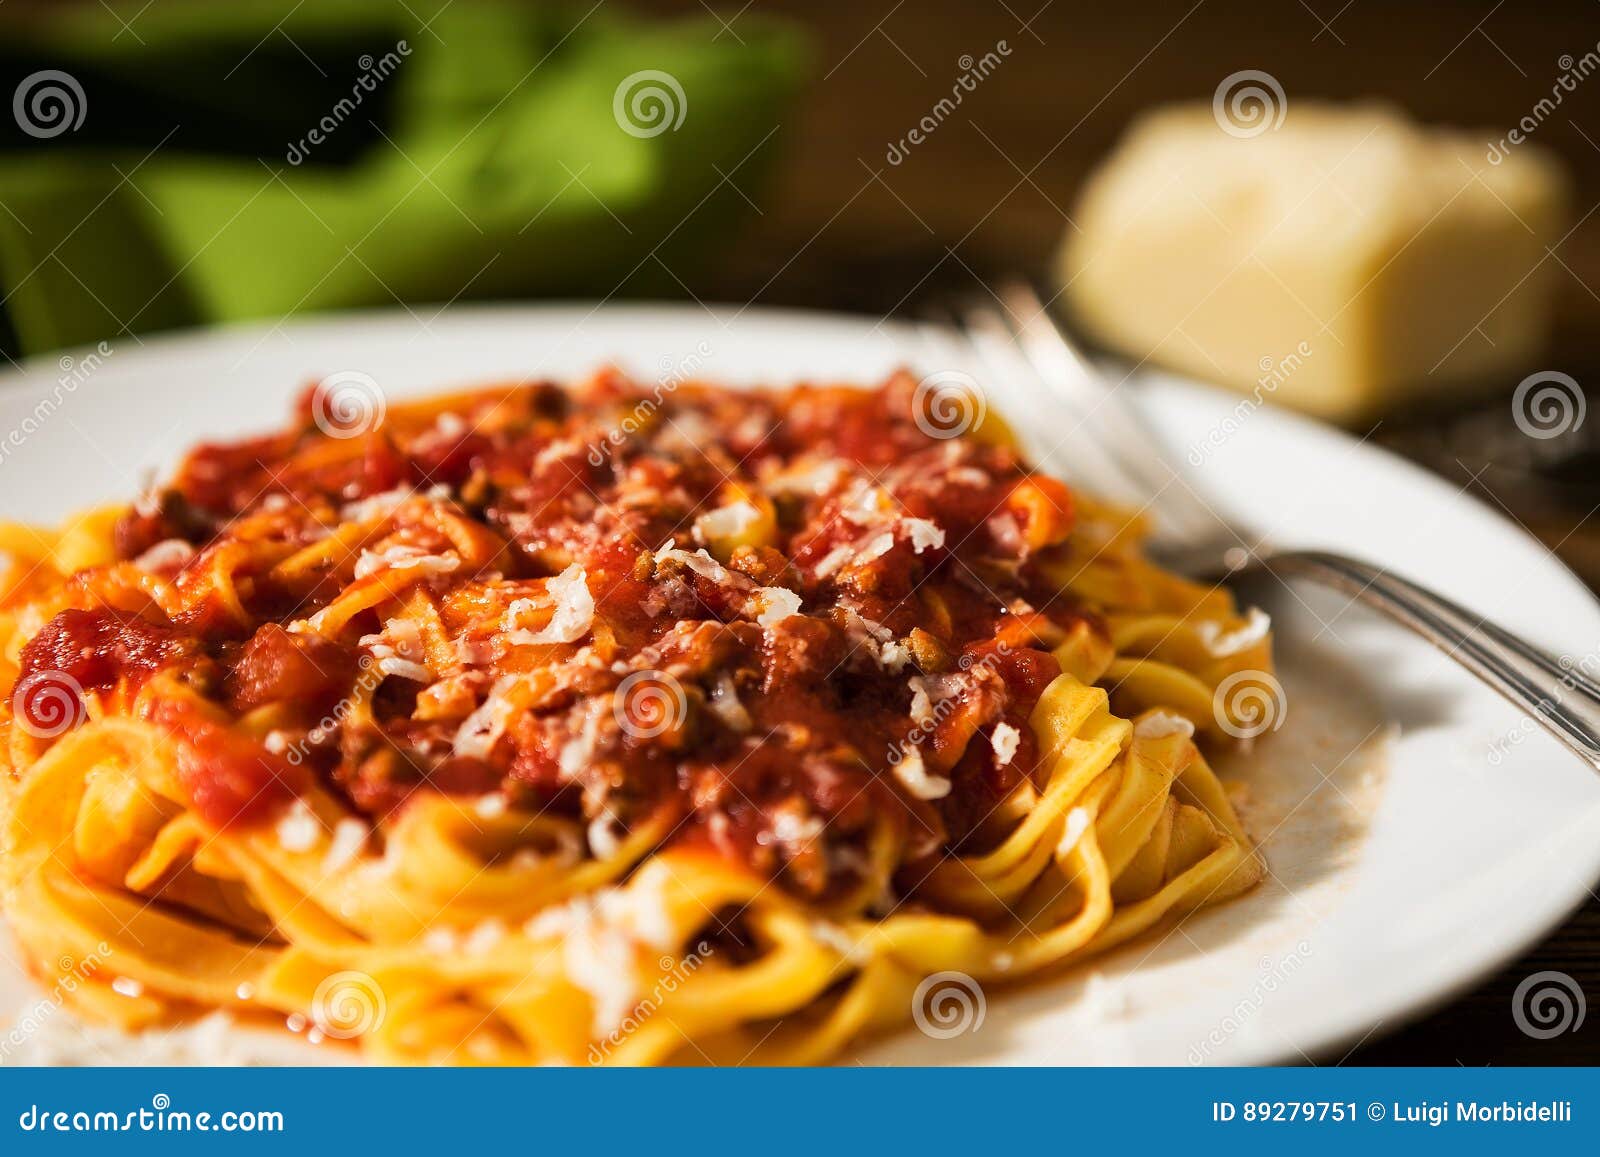 https://thumbs.dreamstime.com/z/closeup-tagliatelle-pasta-bolognese-ragu-over-rustic-table-89279751.jpg